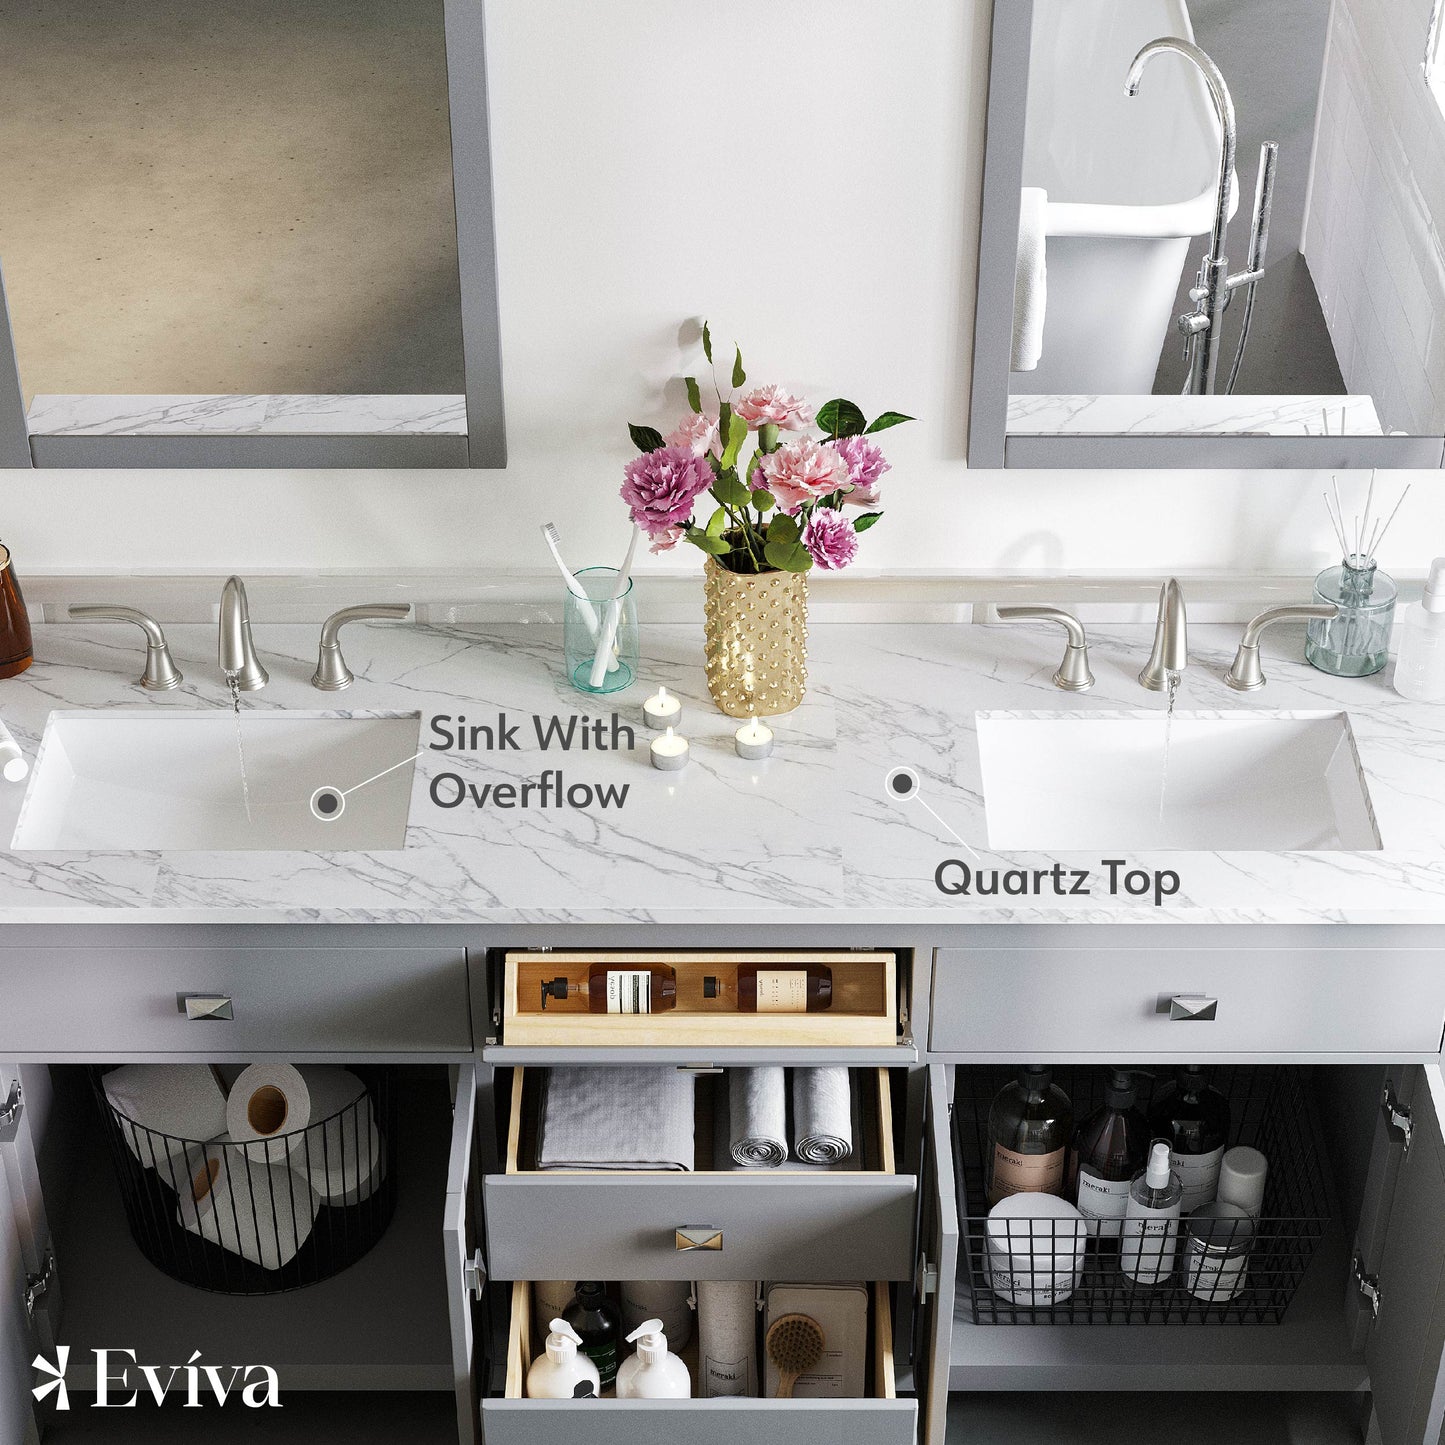 Artemis 60"W x 22"D Gray Double Sink Bathroom Vanity with Carrara Quartz Countertop and Undermount Porcelain Sink